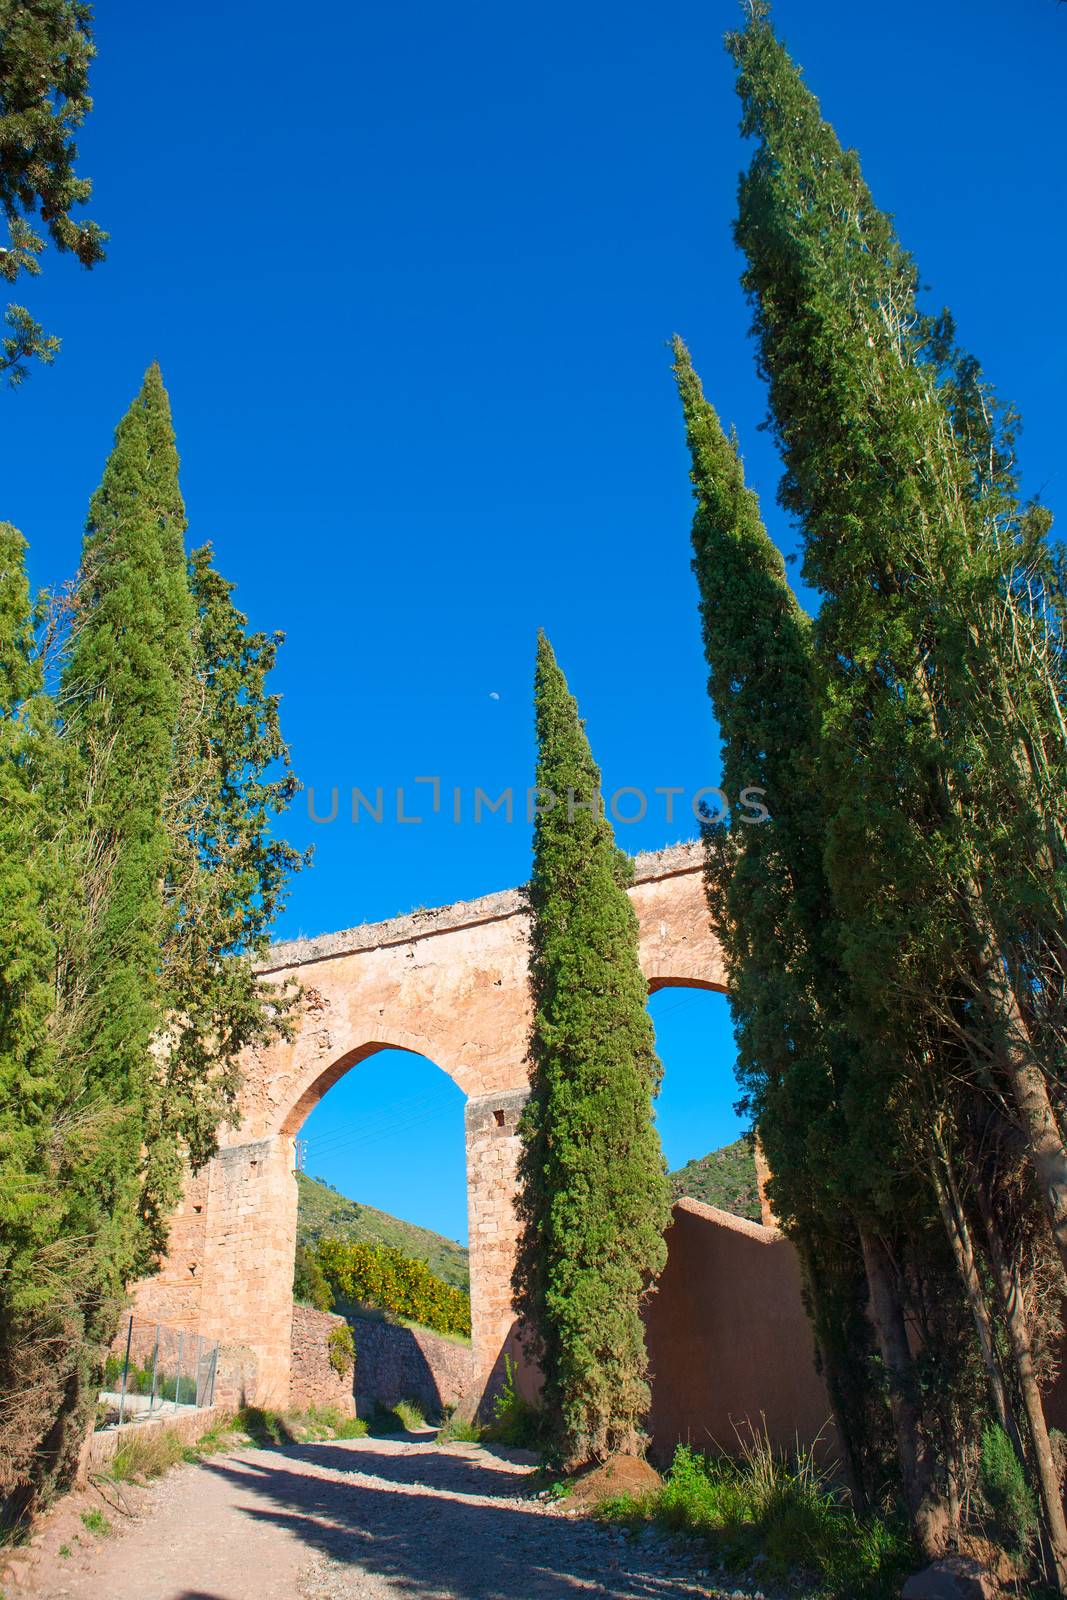 Portaceli Porta Coeli monastery in Valencia at Calderona by lunamarina